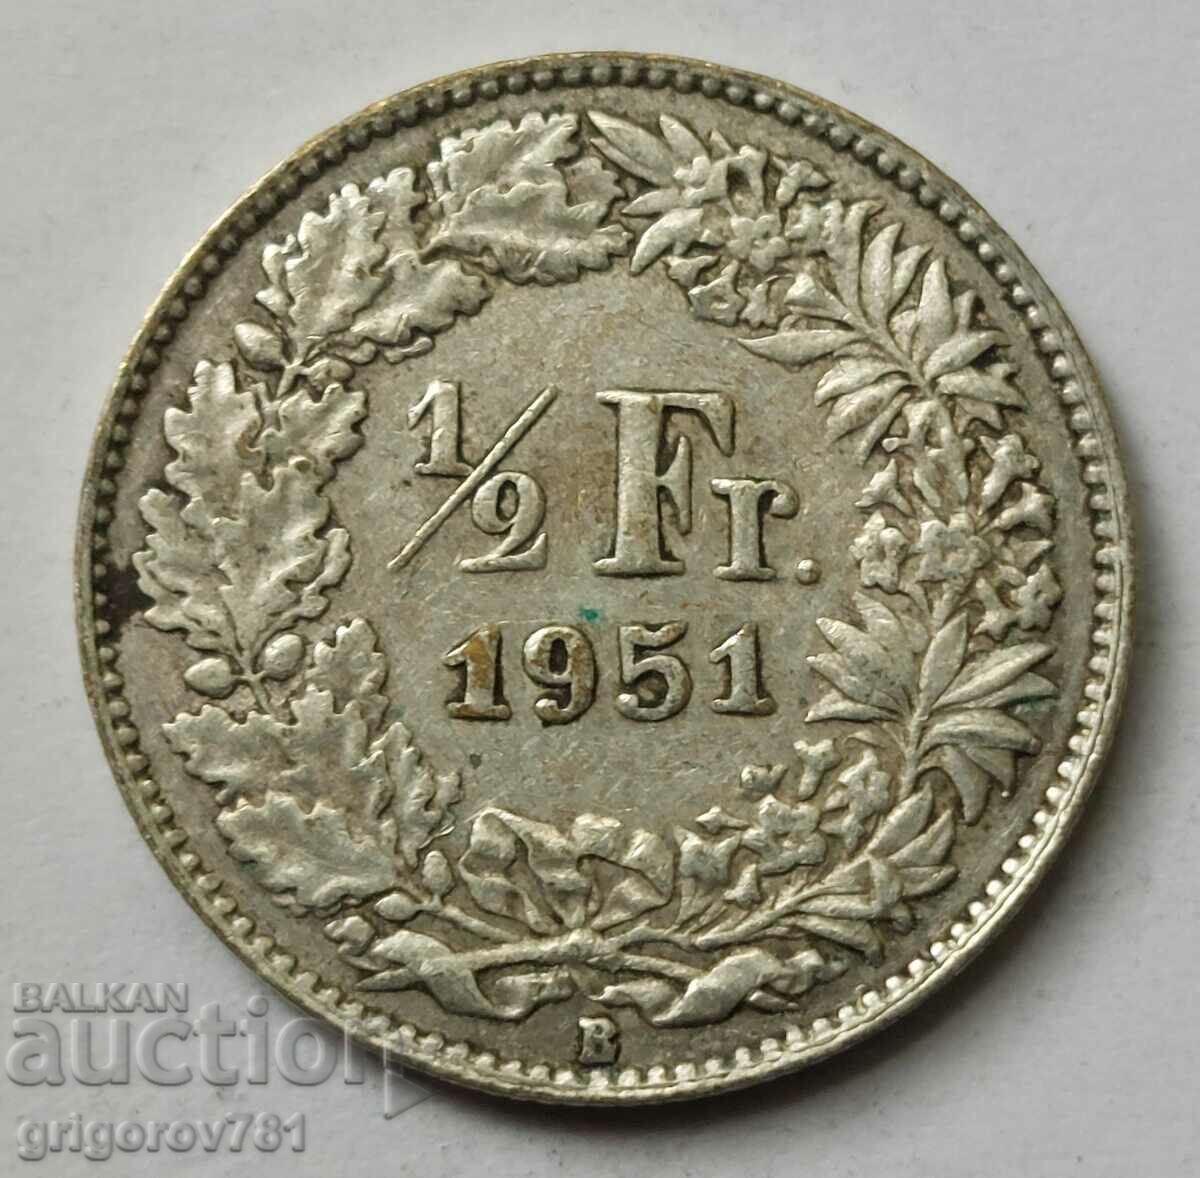 1/2 Franc Argint Elveția 1951 B - Monedă de argint #67